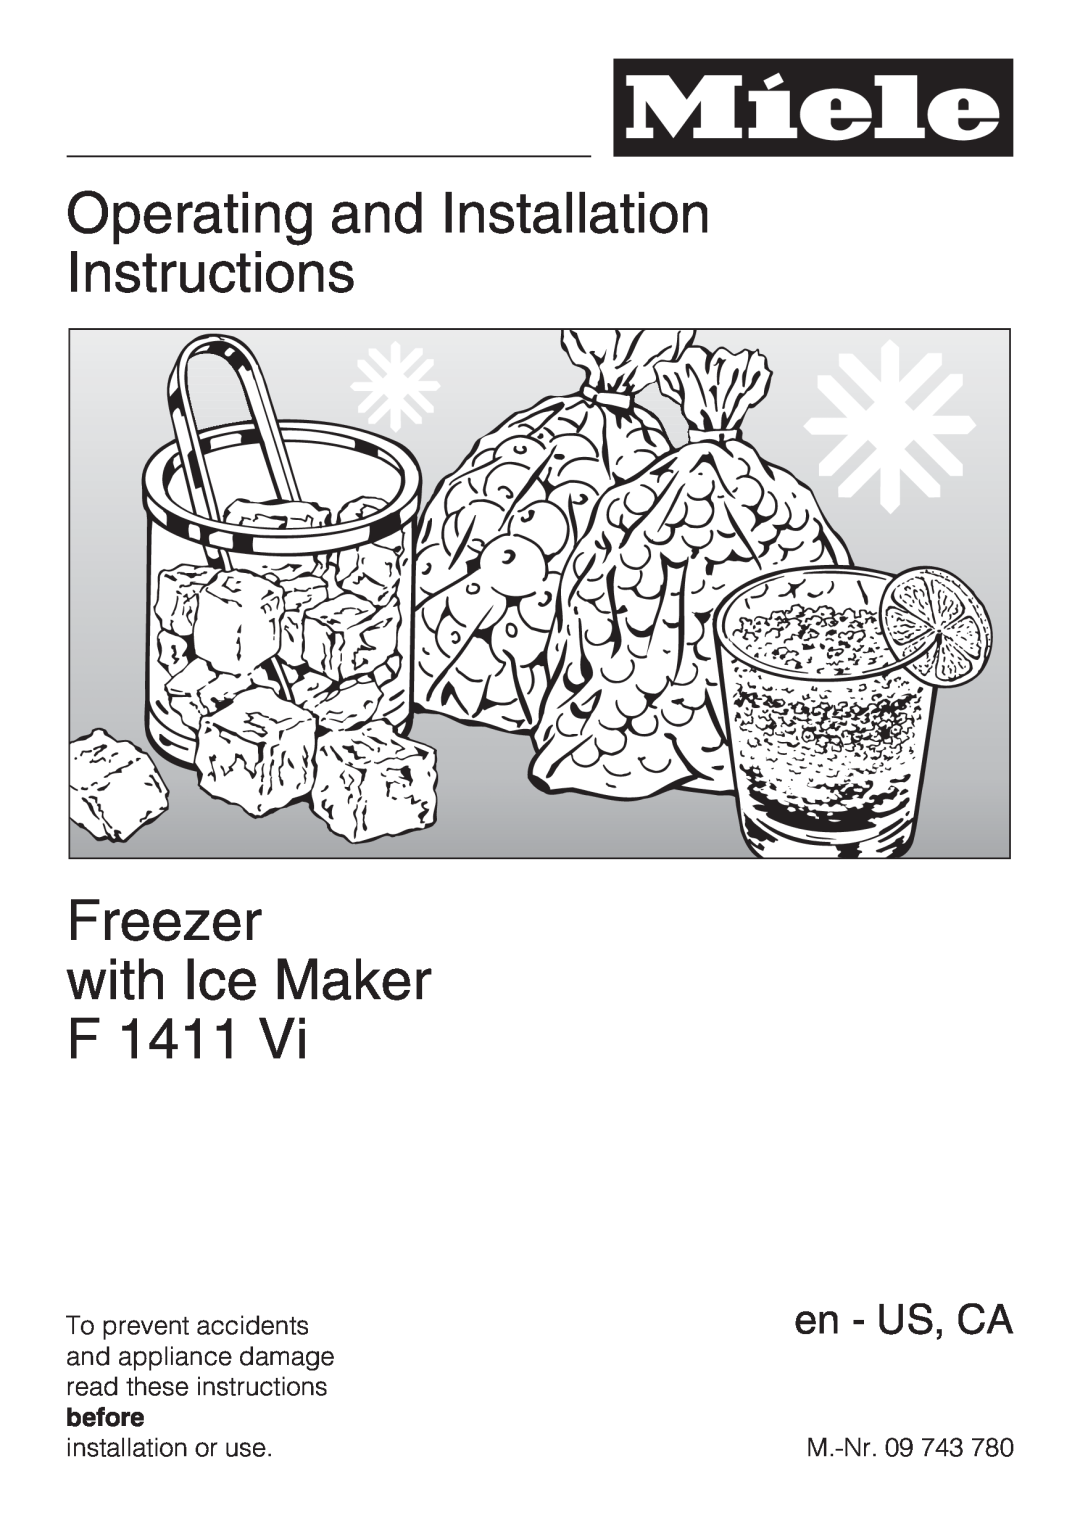 Miele F 1411 Vi installation instructions Operating and Installation Instructions Freezer, with Ice Maker F 1411 